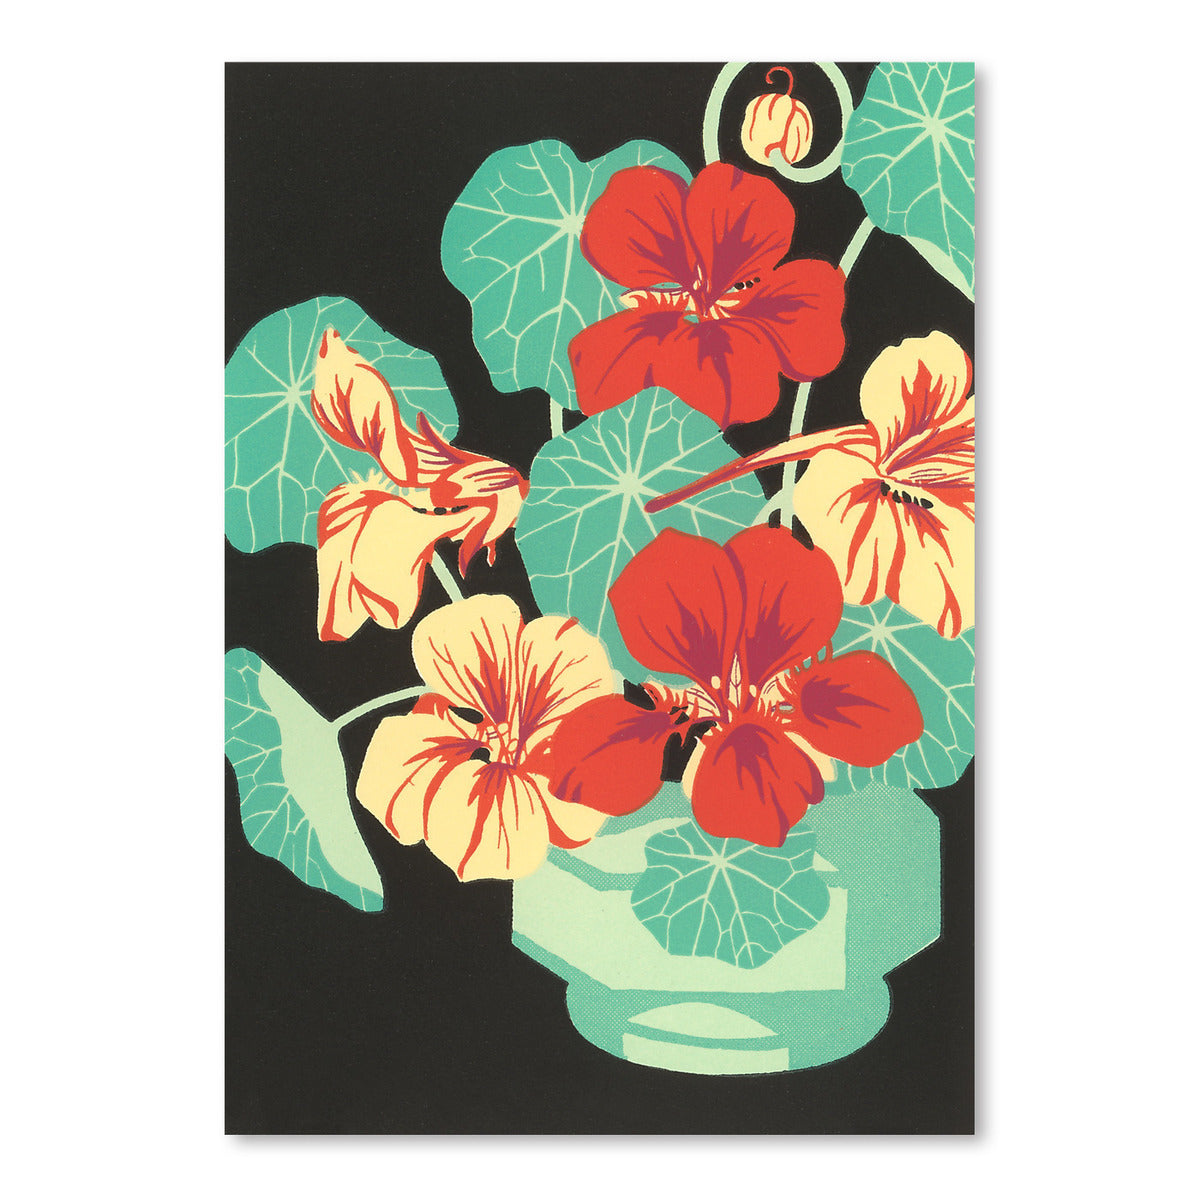 Flowers In Vase by Found Image Press Art Print - Art Print - Americanflat